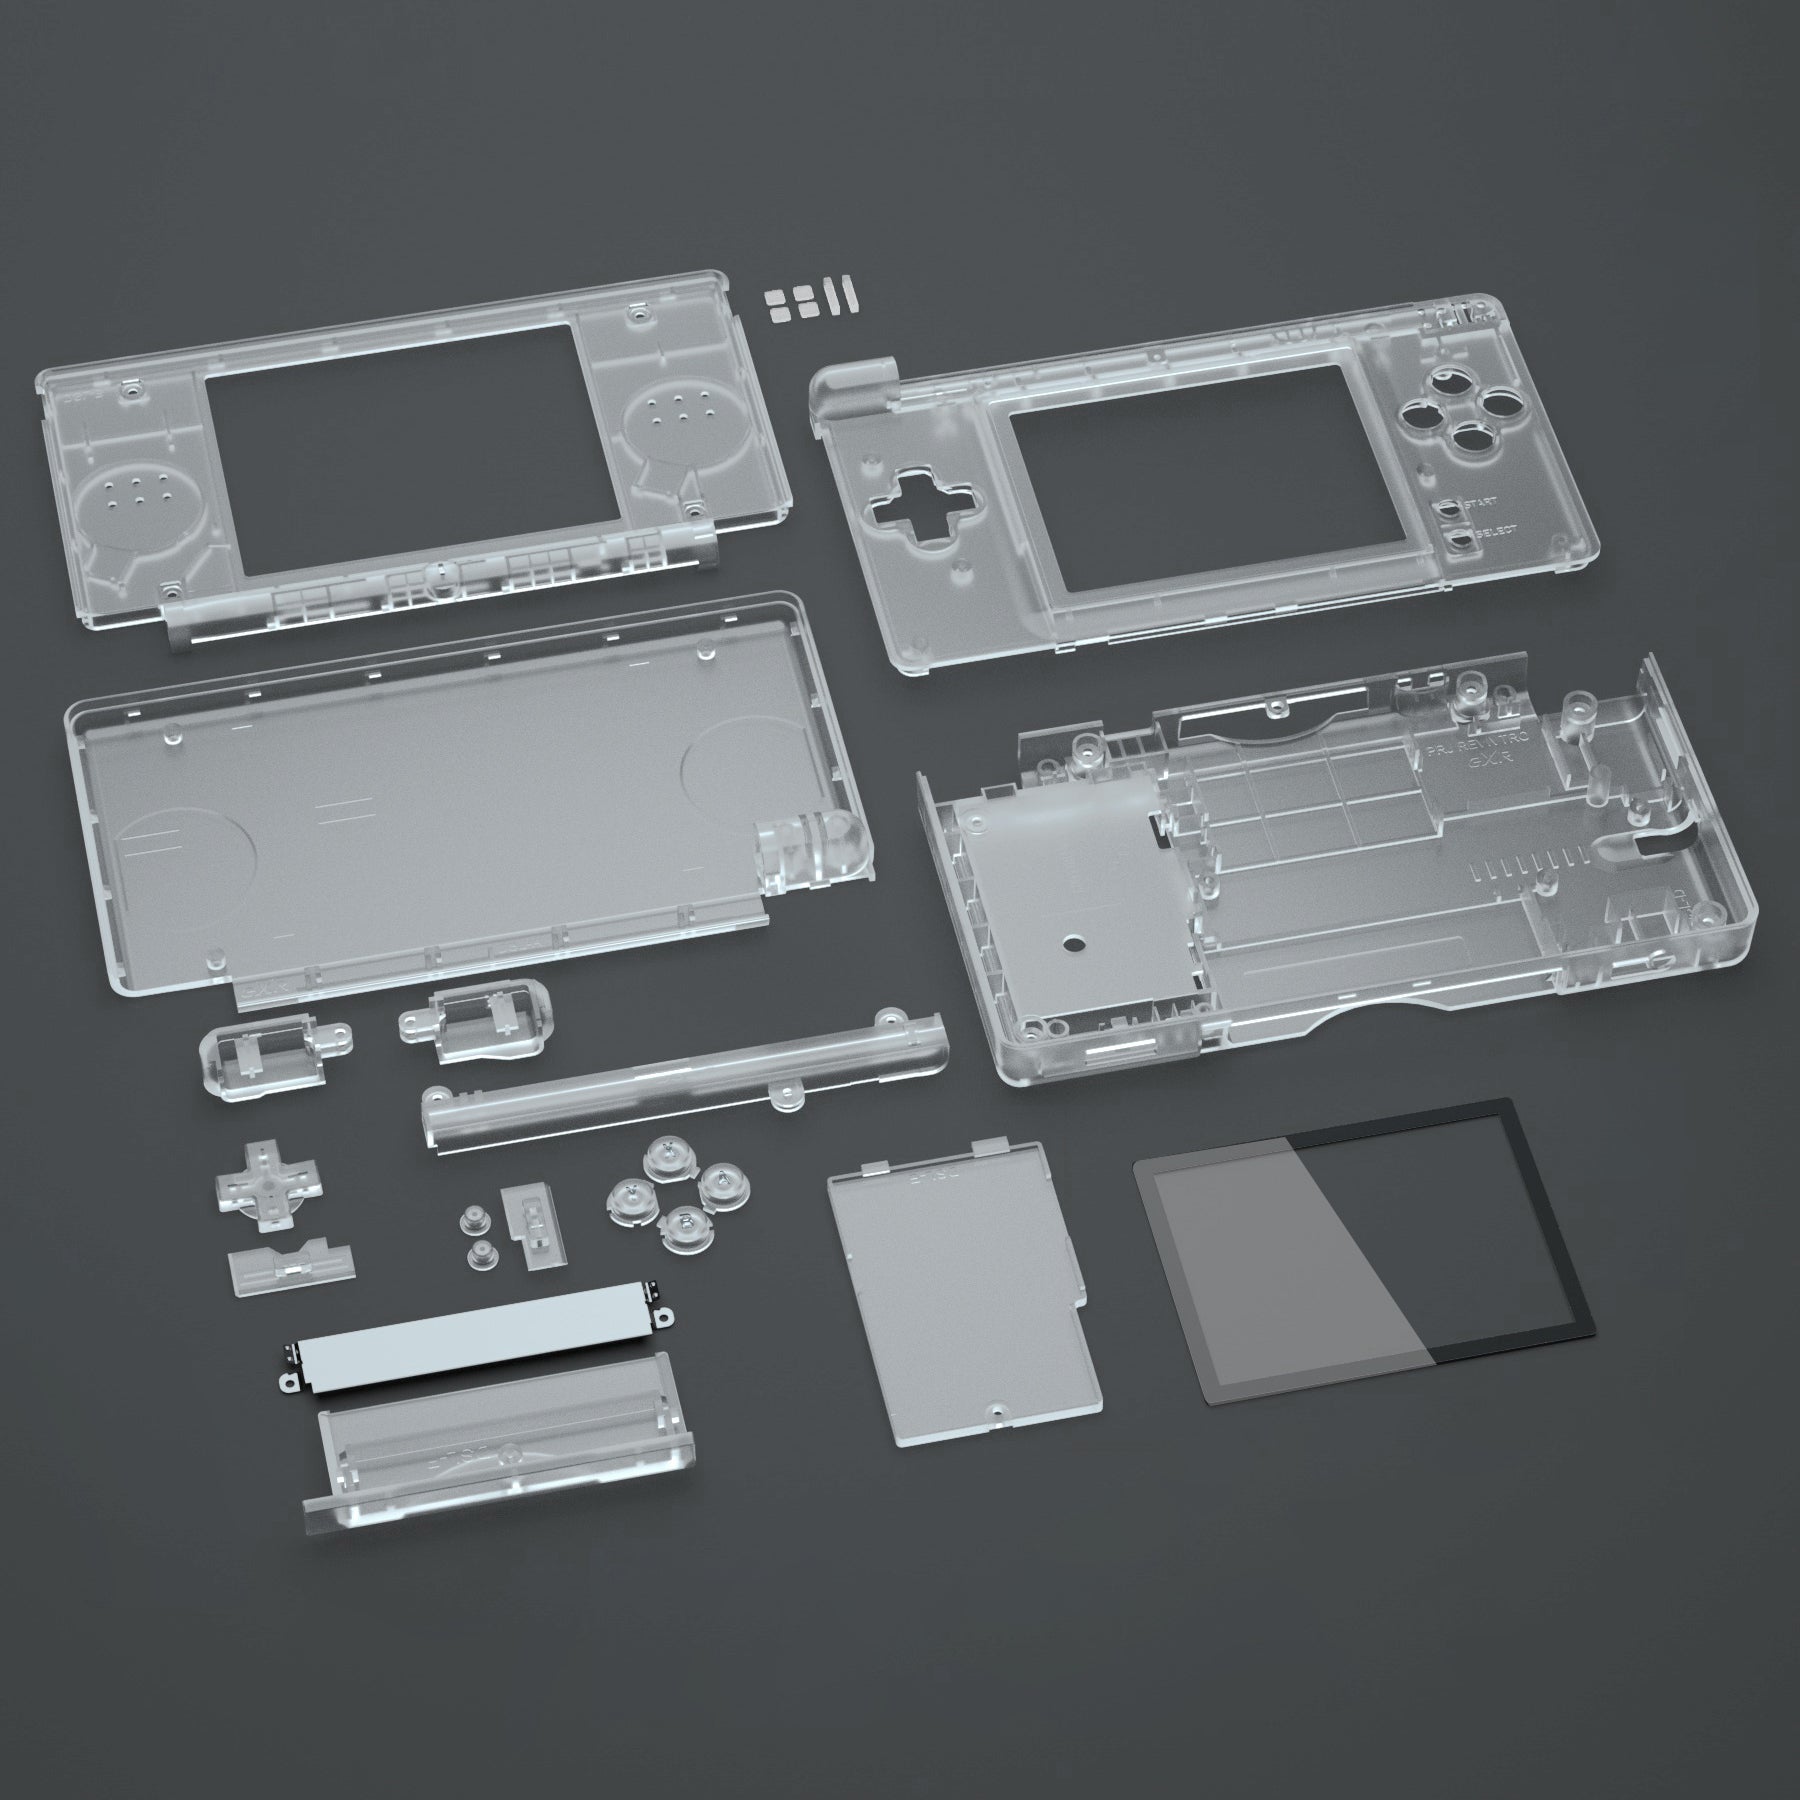 Nintendo DSi NDSI XL Housing Shell cover buttons screws kit